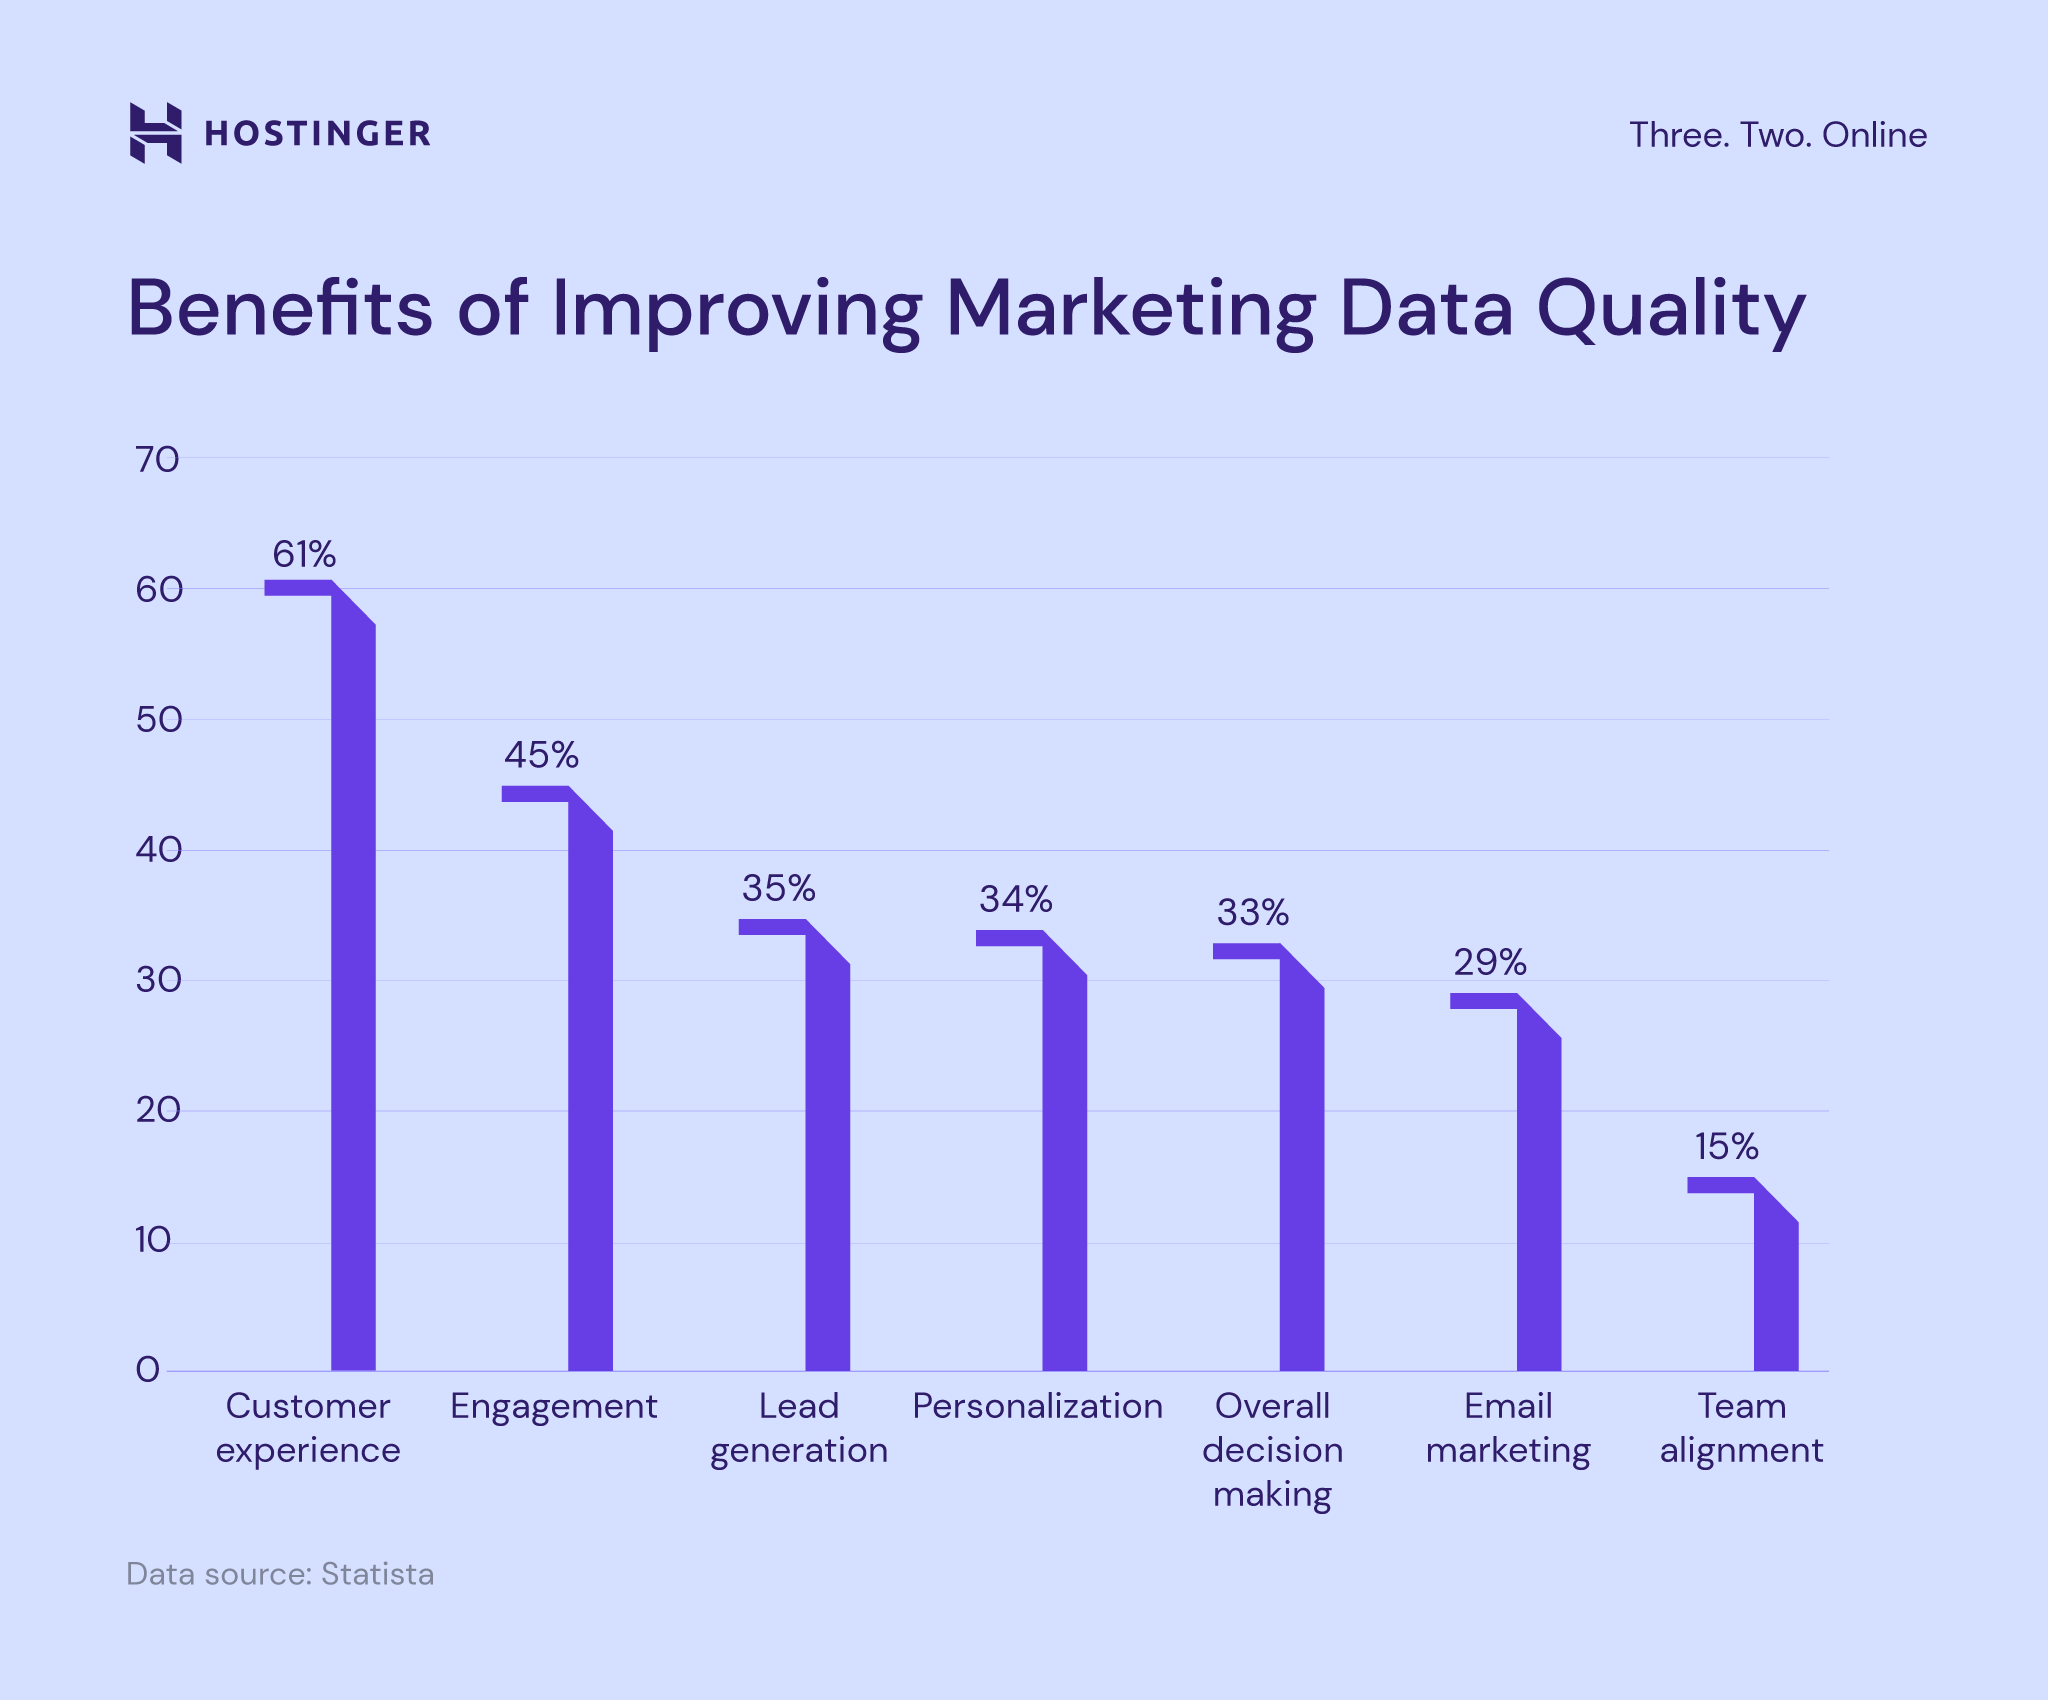 Benefits of improving marketing data quality
